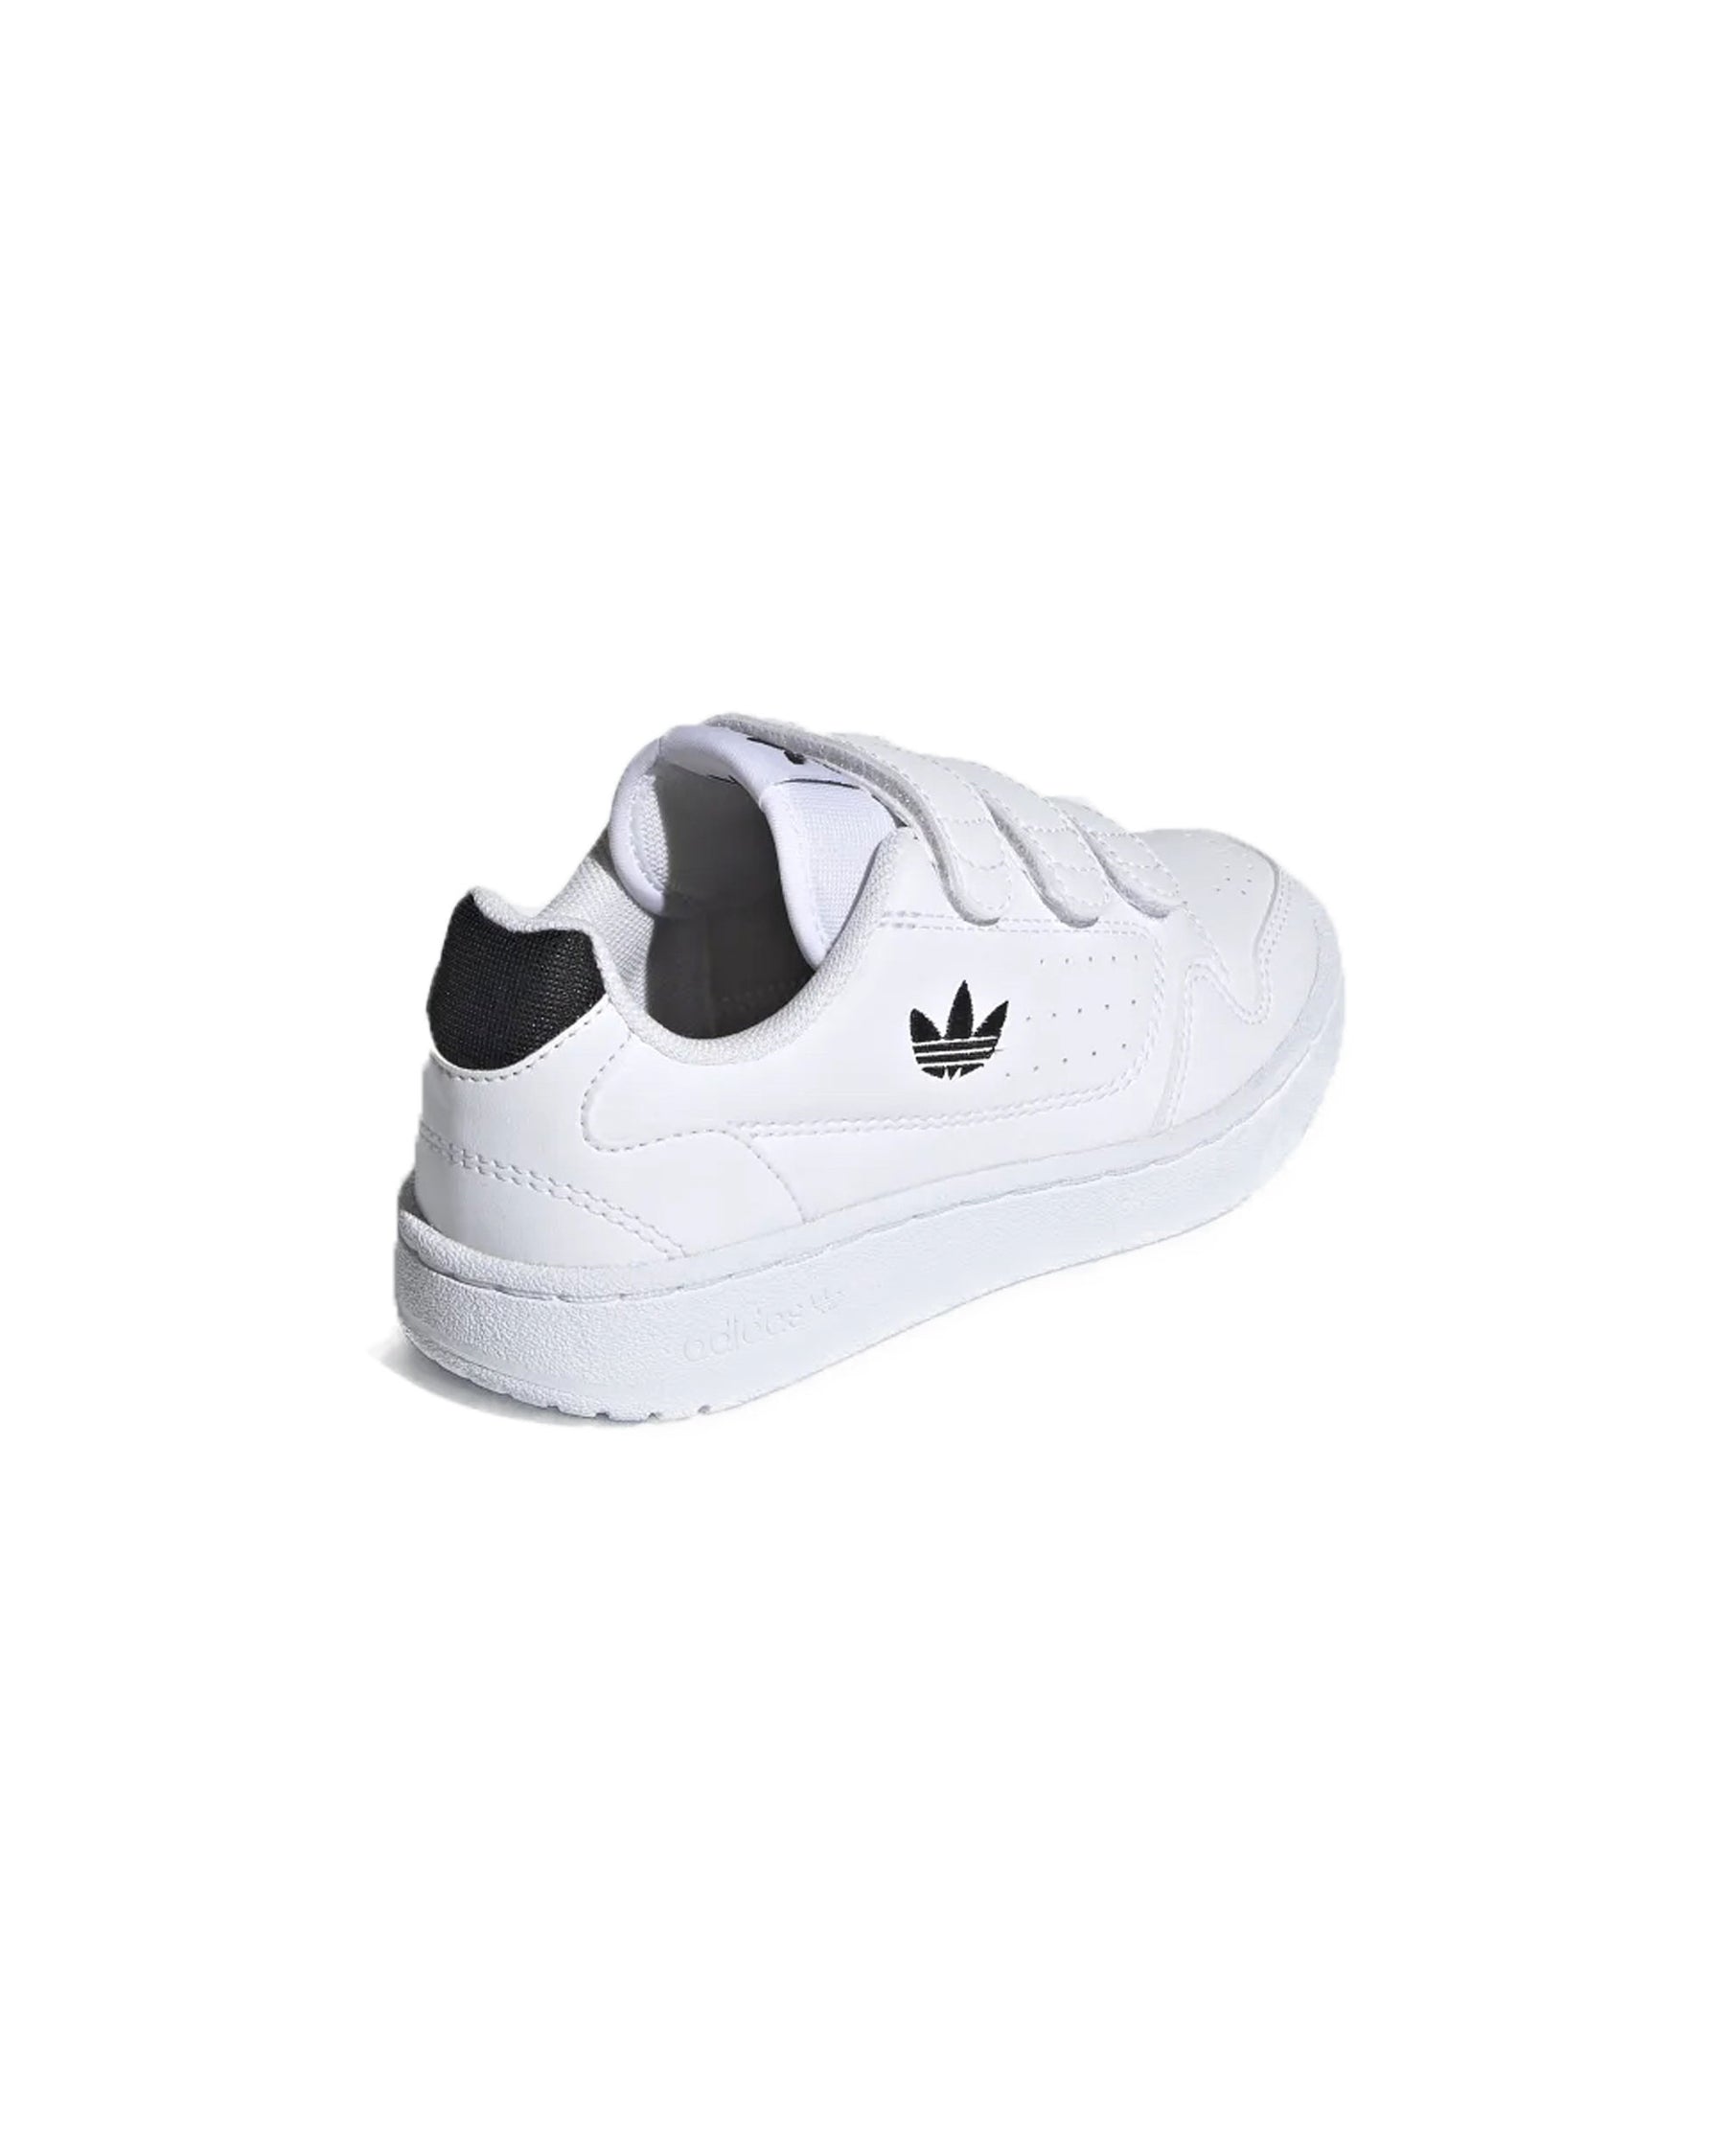 Adidas NY 90 CF C White